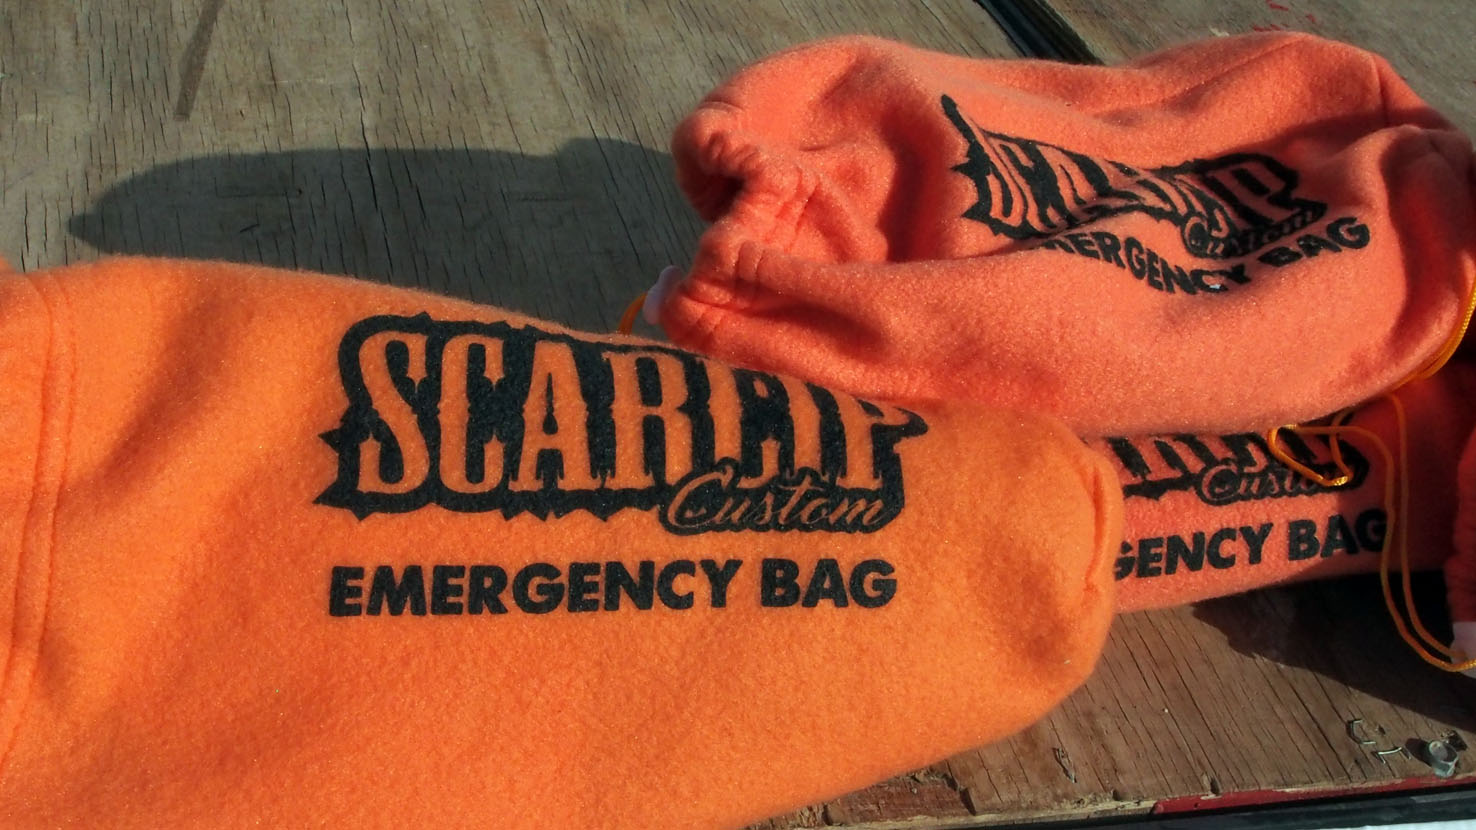 Scarlip Emergency Bag.